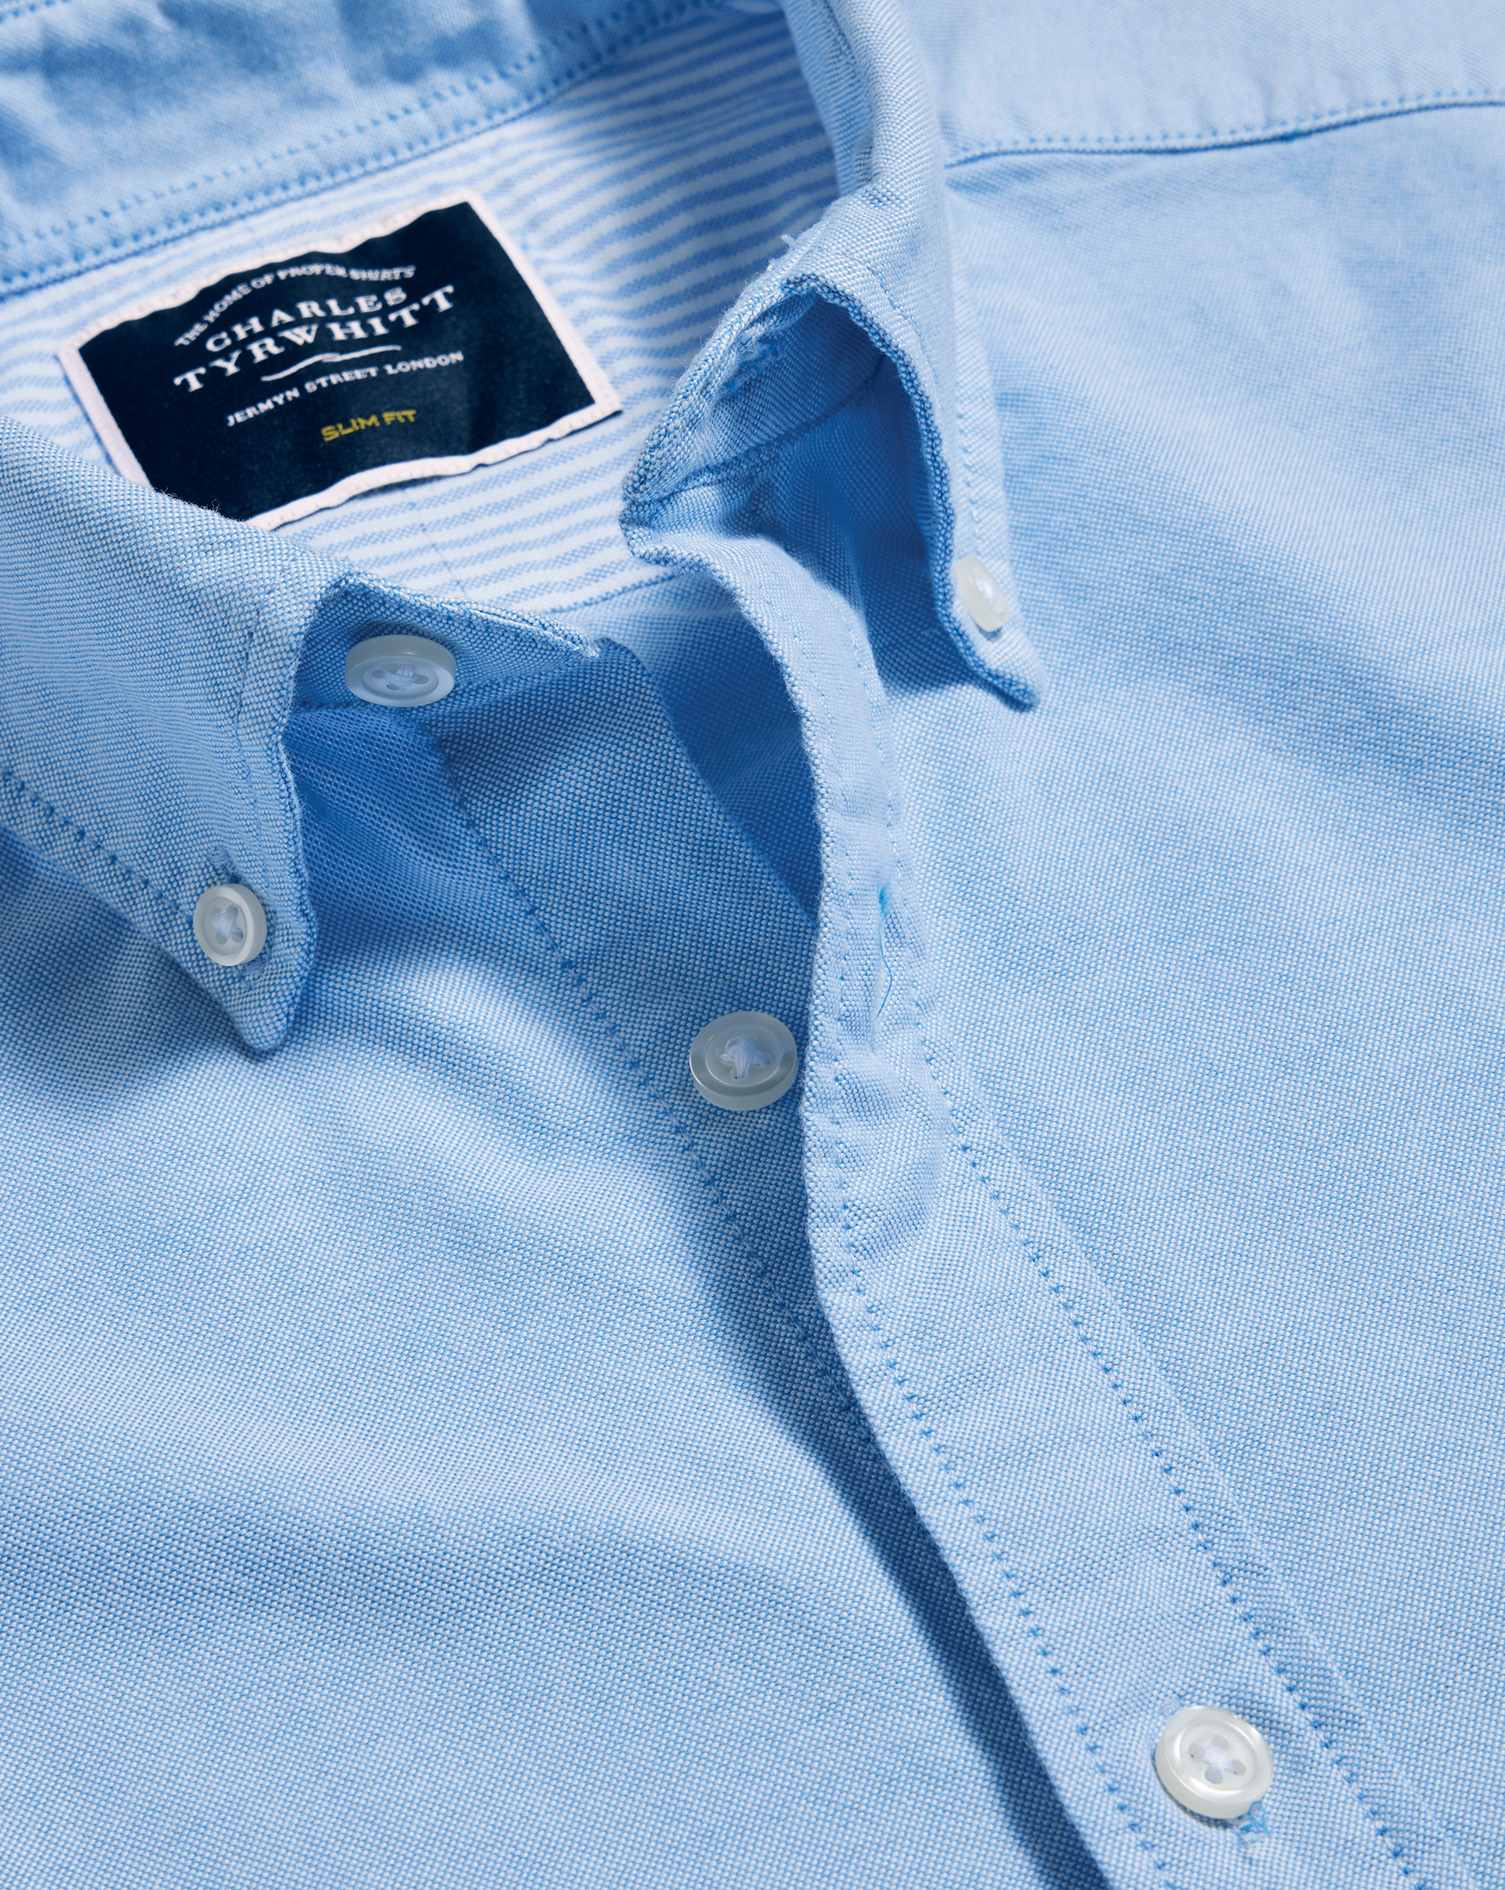 Premier Sky Blue Short Sleeved Oxford Shirt PR236 Button Collar 